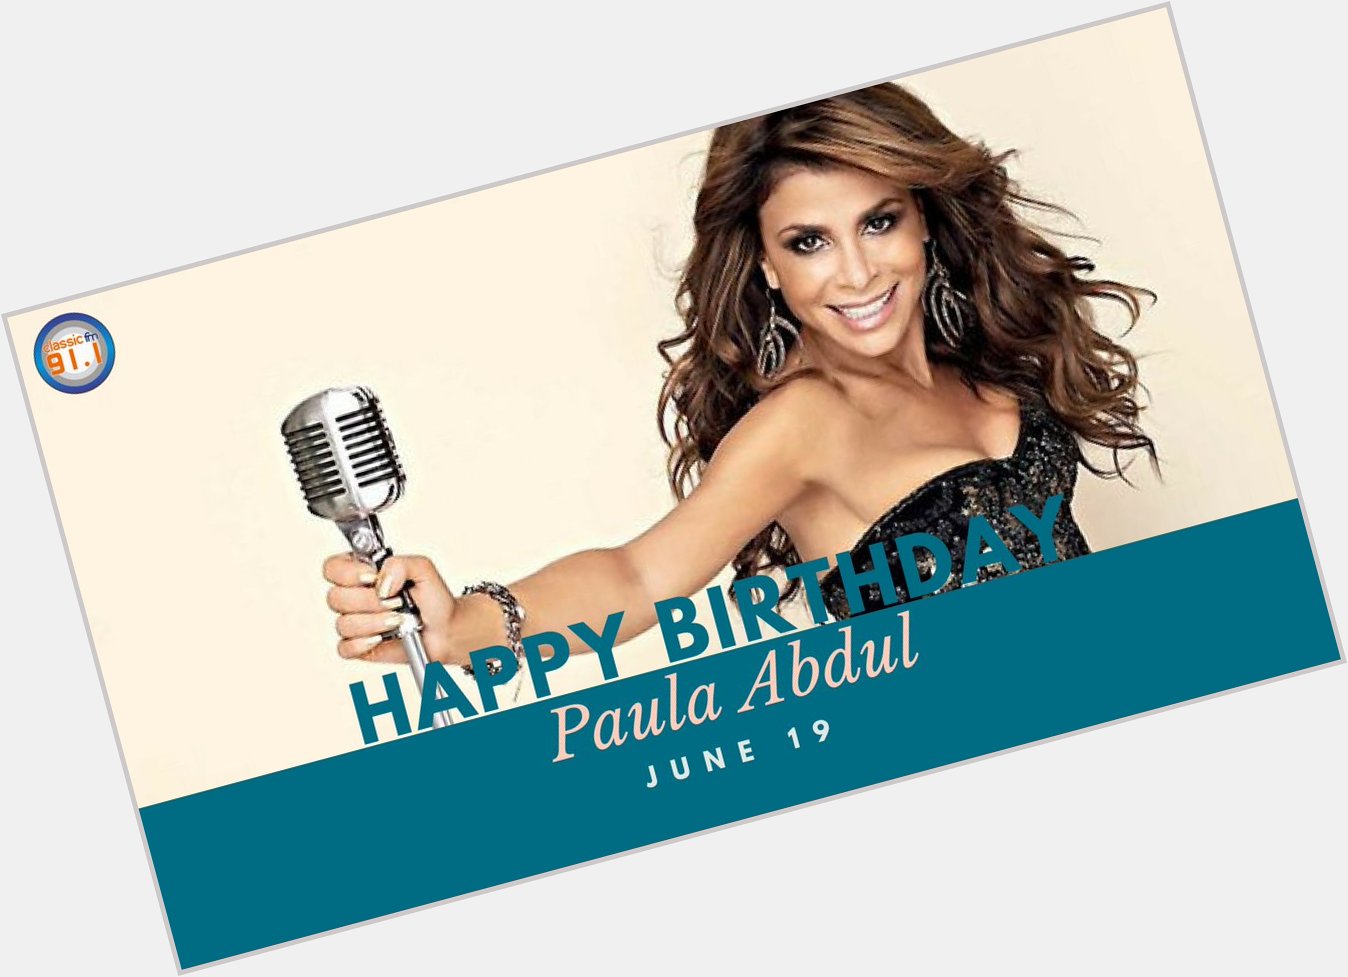 Happy birthday to Singer and former American Idol judge, Paula Abdul. 